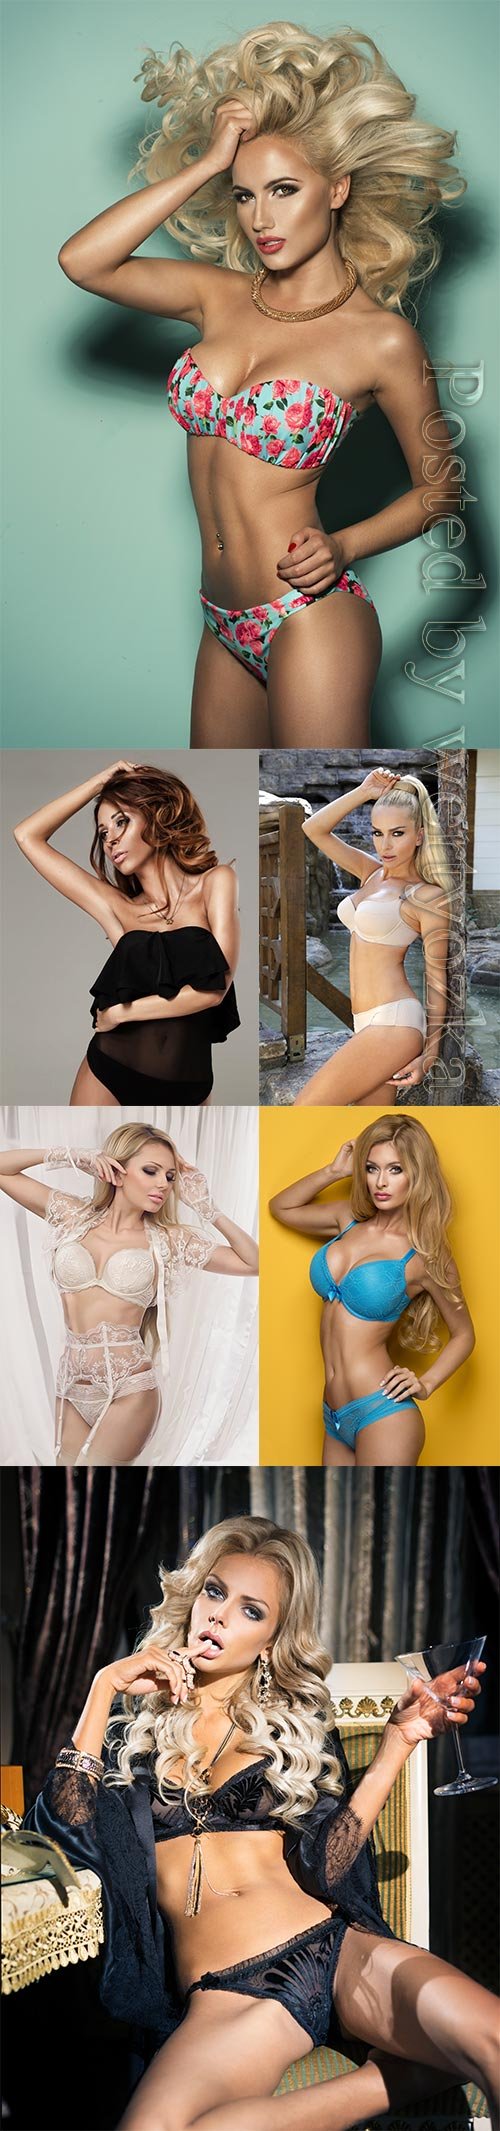 Luxury women in lingerie posing stock photo vol 25